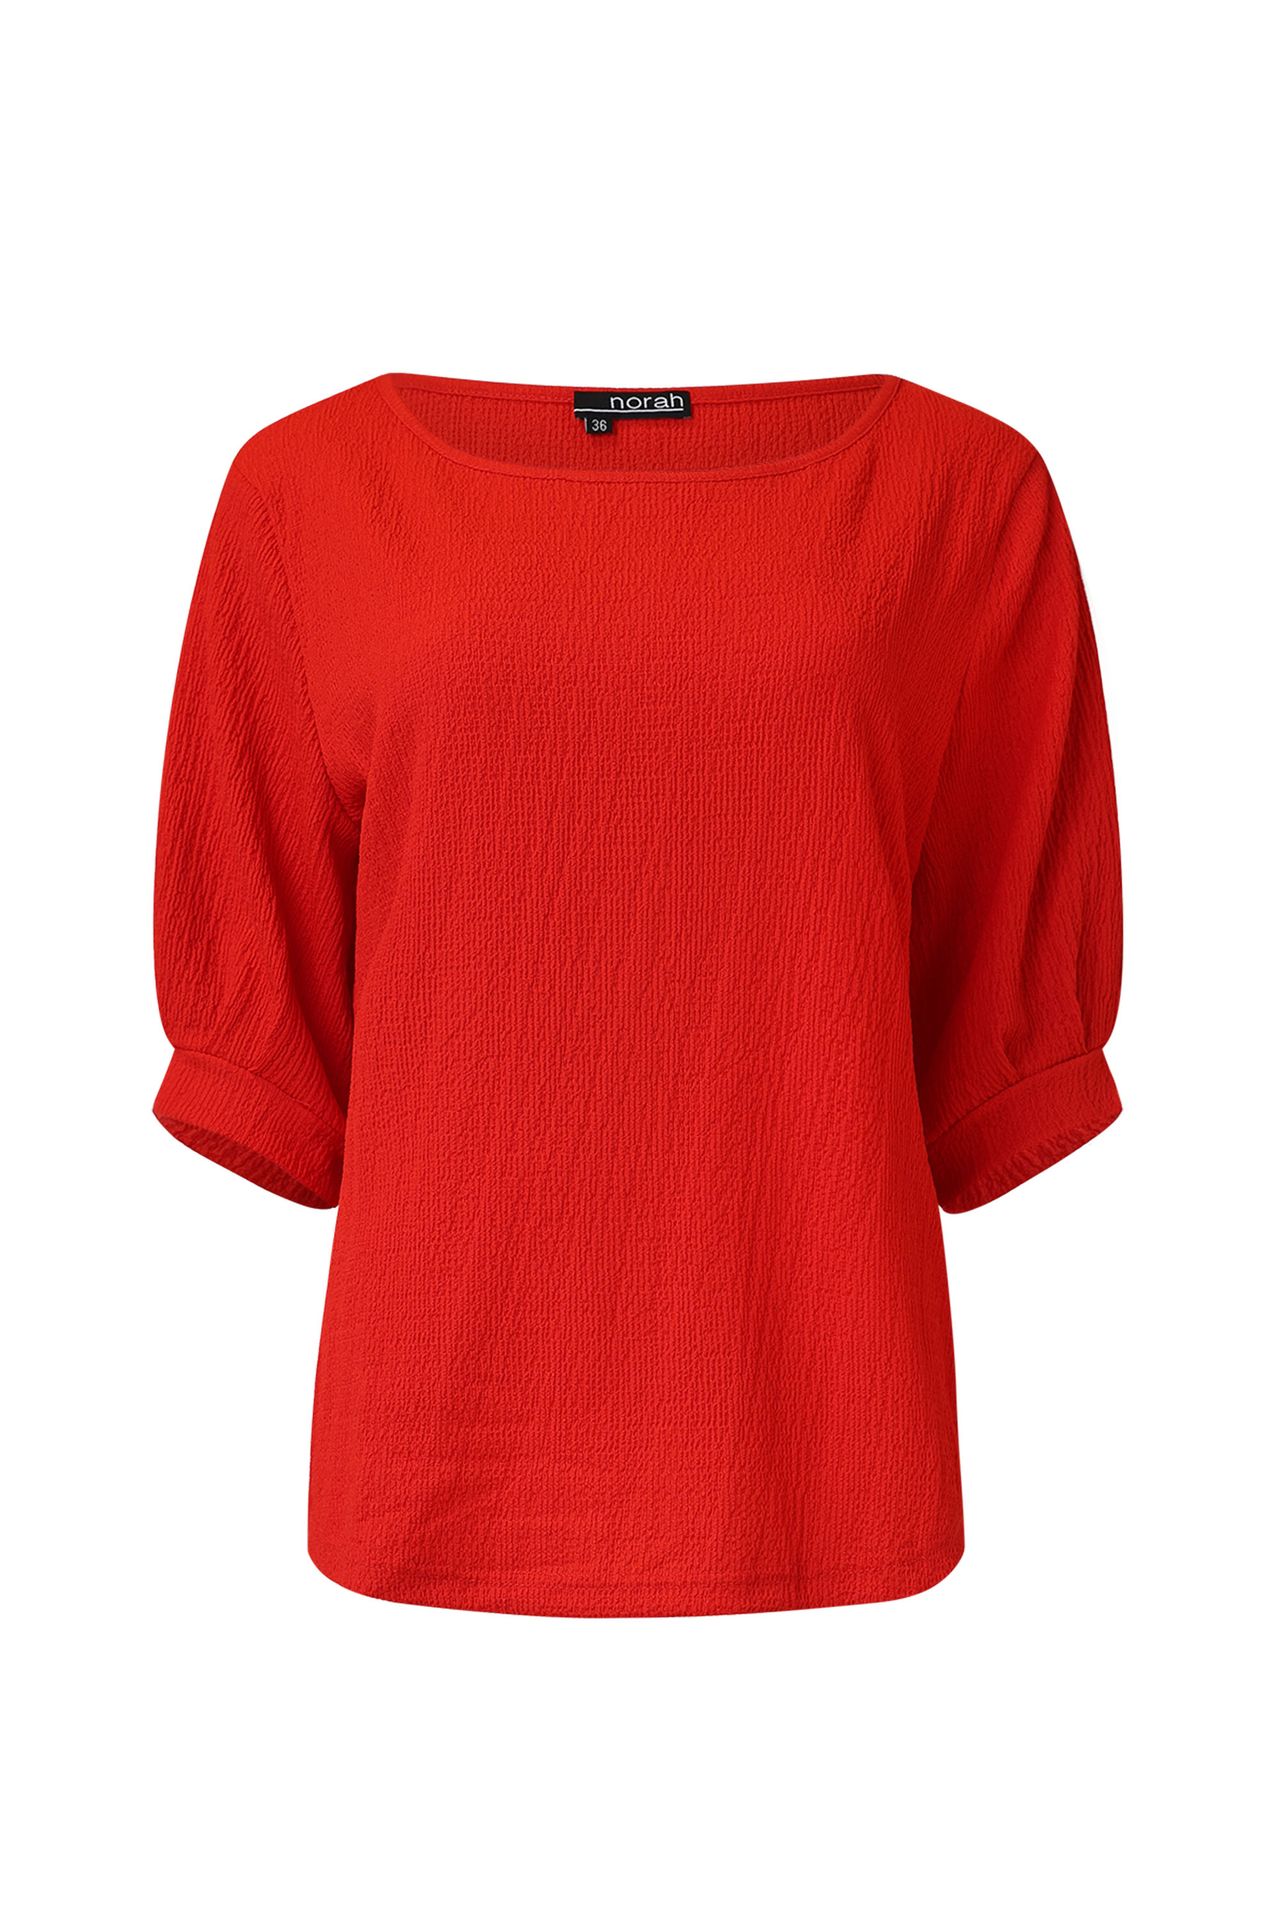 Norah Rood shirt tomato 214326-668